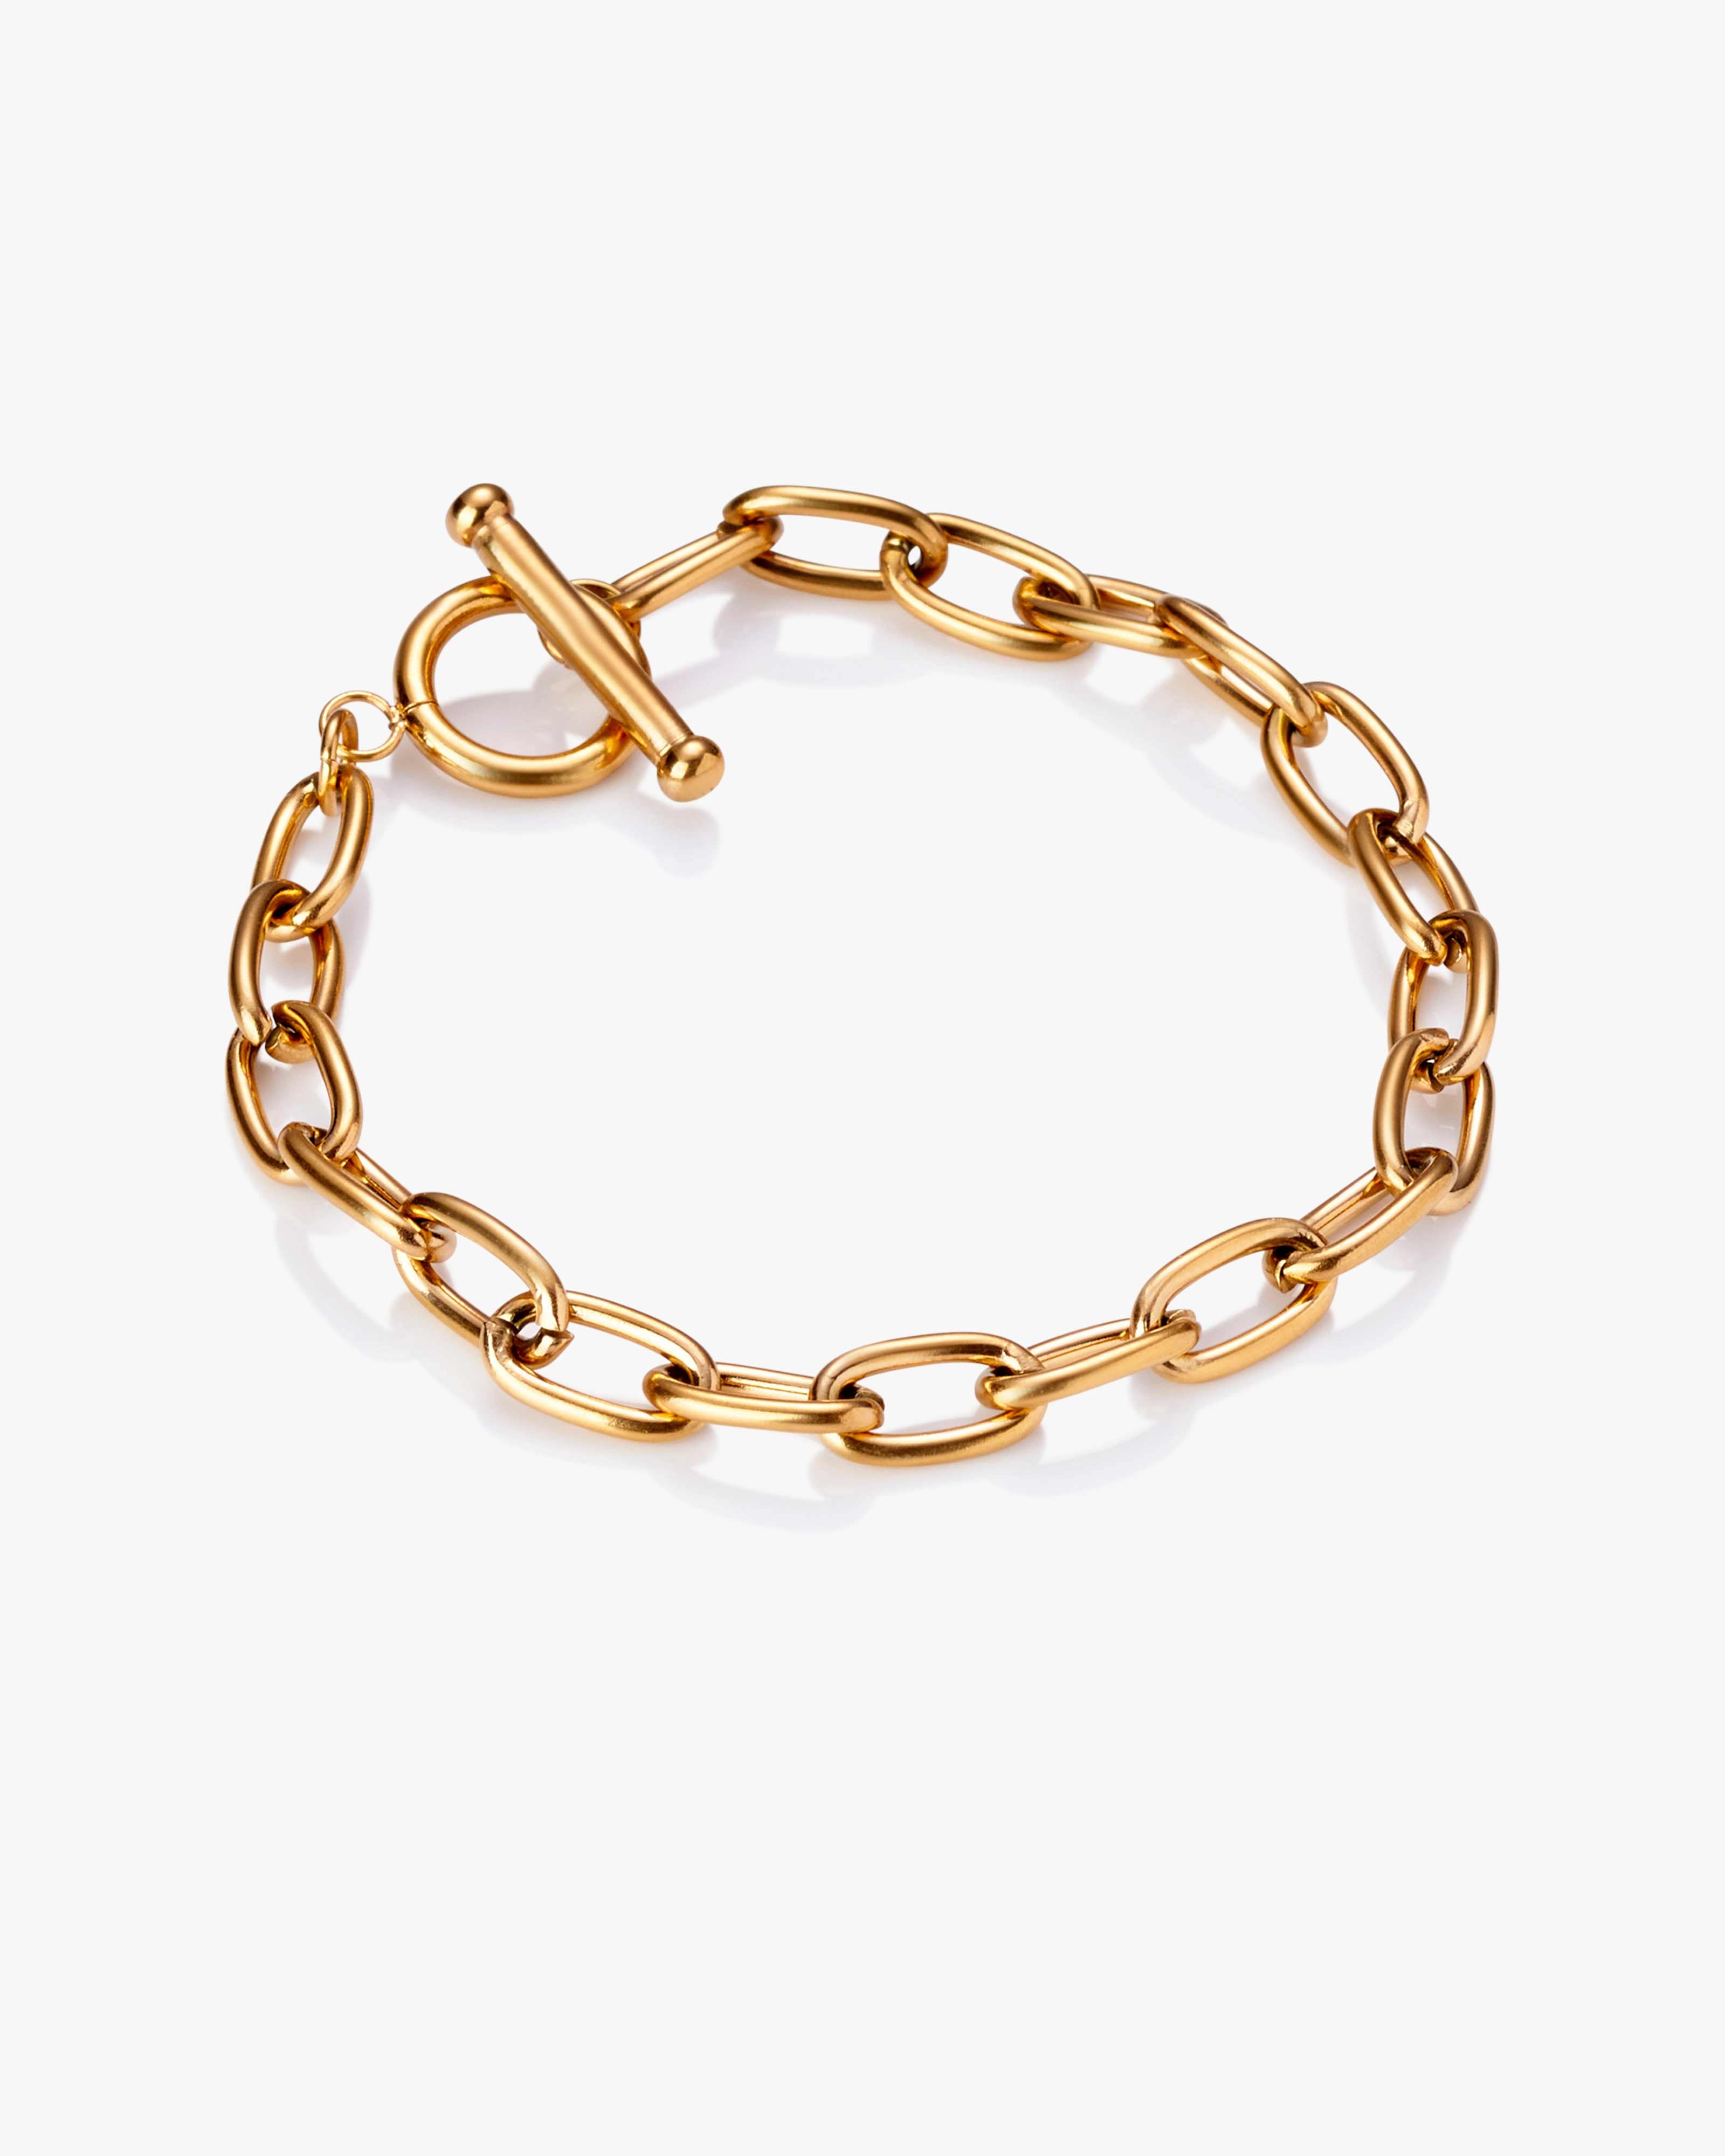 Gold T-bar Oval Link Chain Bracelet